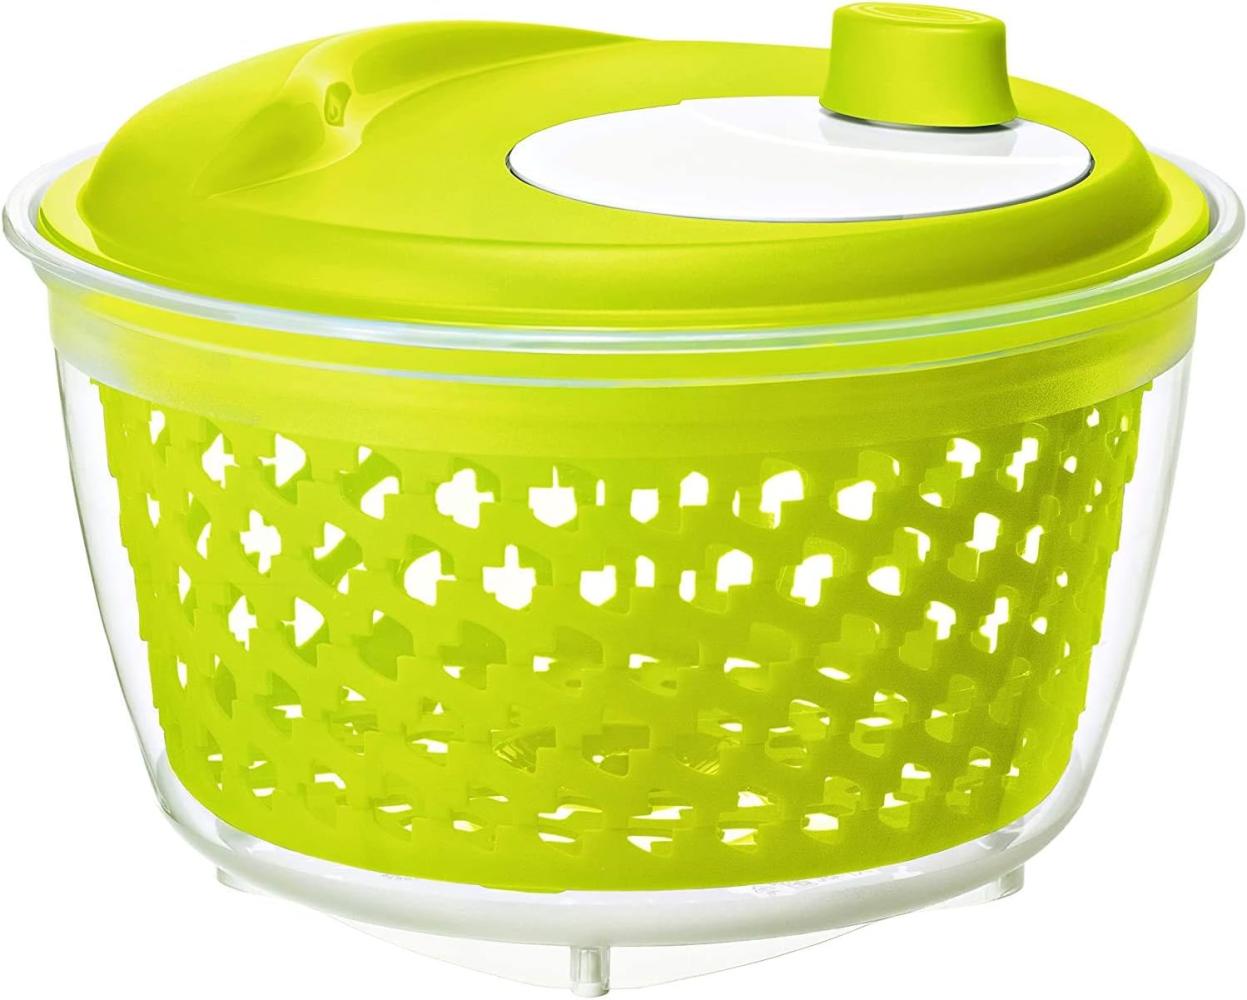 Rotho Fresh Salatschleuder, Kunststoff (PP) BPA-frei, grün/transparent, 4,5l (25,0 x 25,0 x 16,5 cm) Bild 1